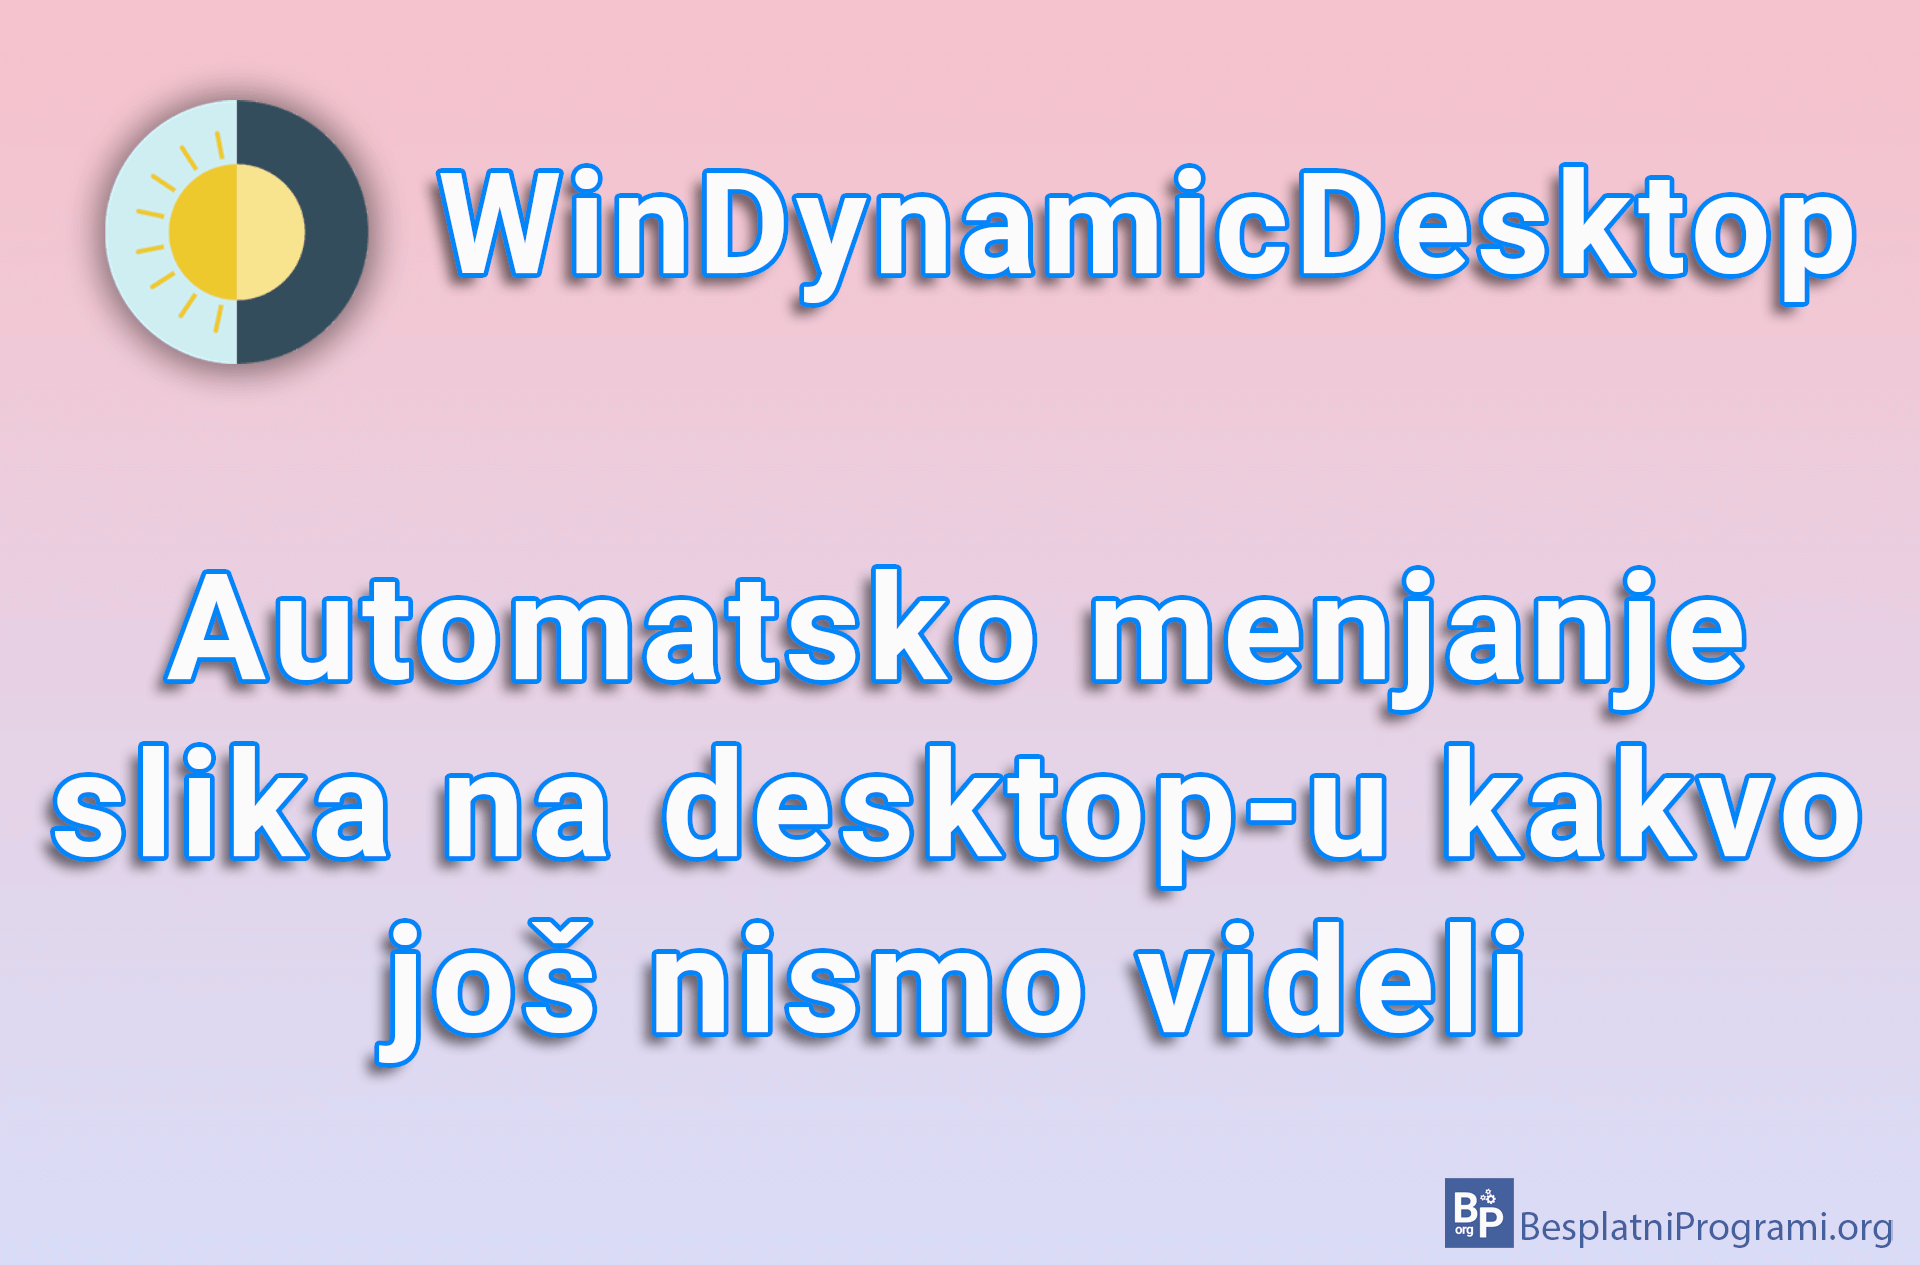 WinDynamicDesktop – Automatsko menjanje slika na desktop-u kakvo još nismo videli